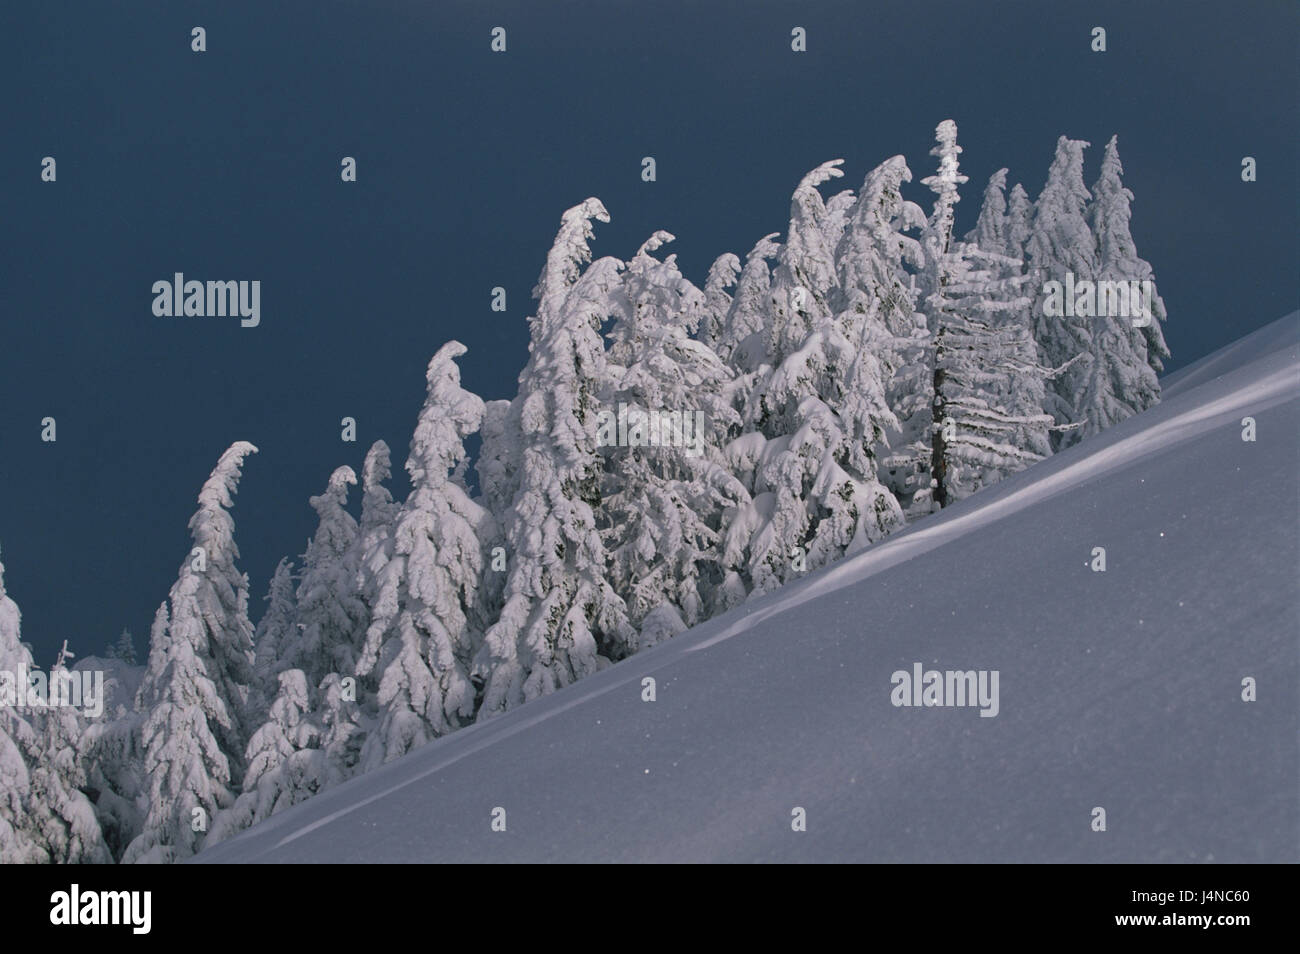 Germany, Bavaria, nice mountain, mountain, trees, winter scenery, beautyful clouds Stock Photo